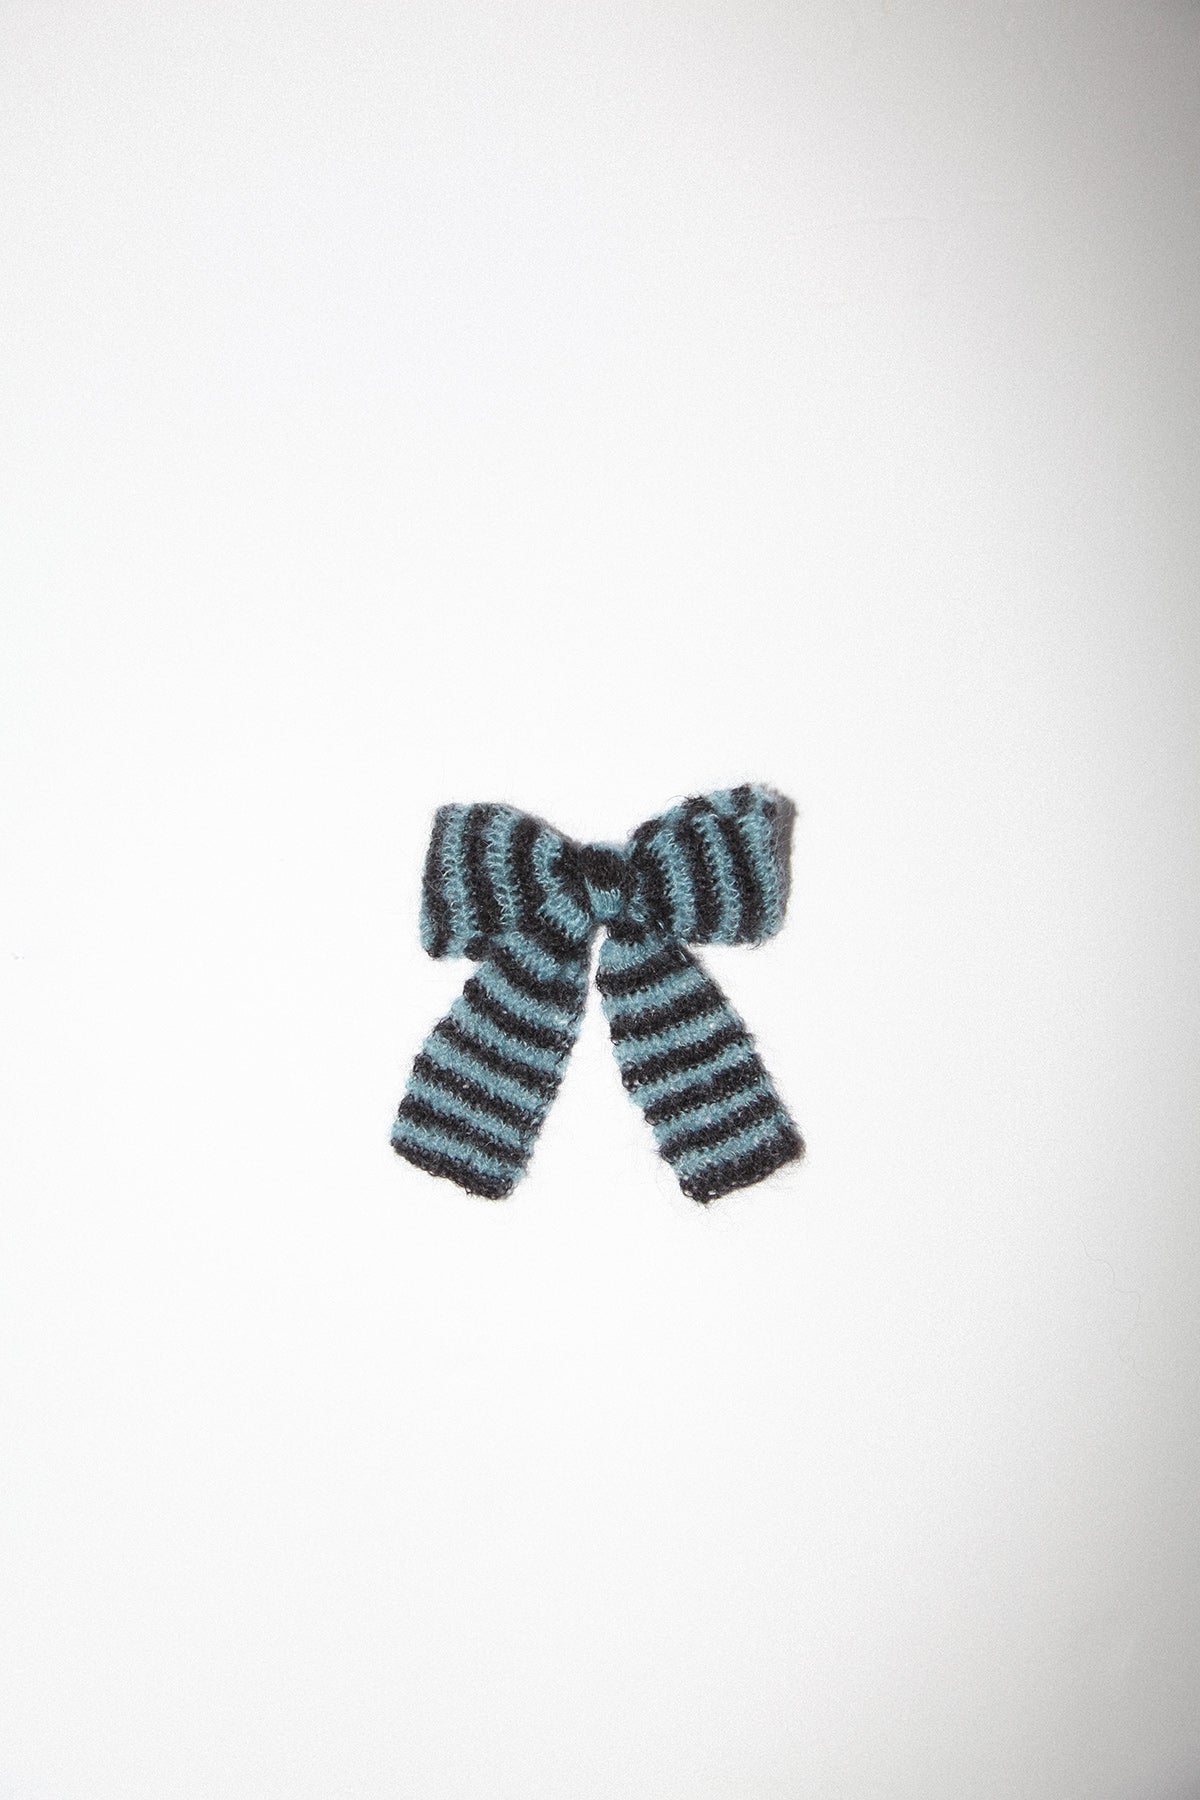 Funny Sad Stuff Medium Crocheted Bow in Black & Blue Stripe